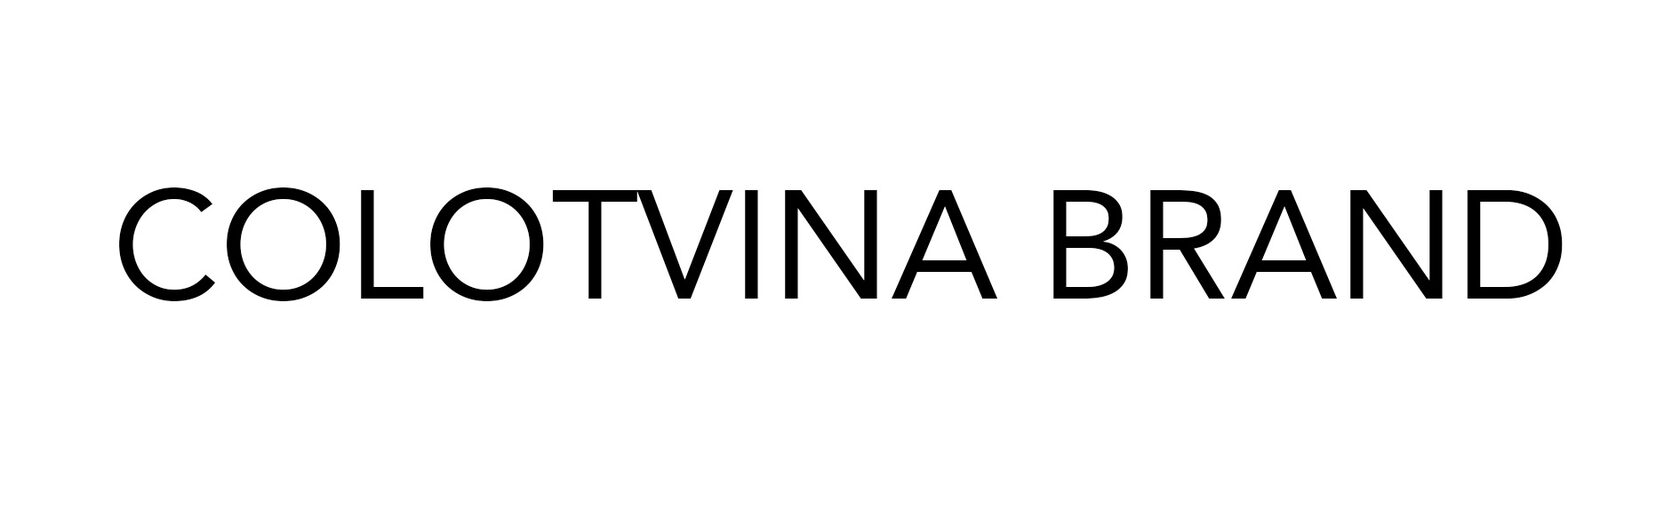 Colotvina Brand